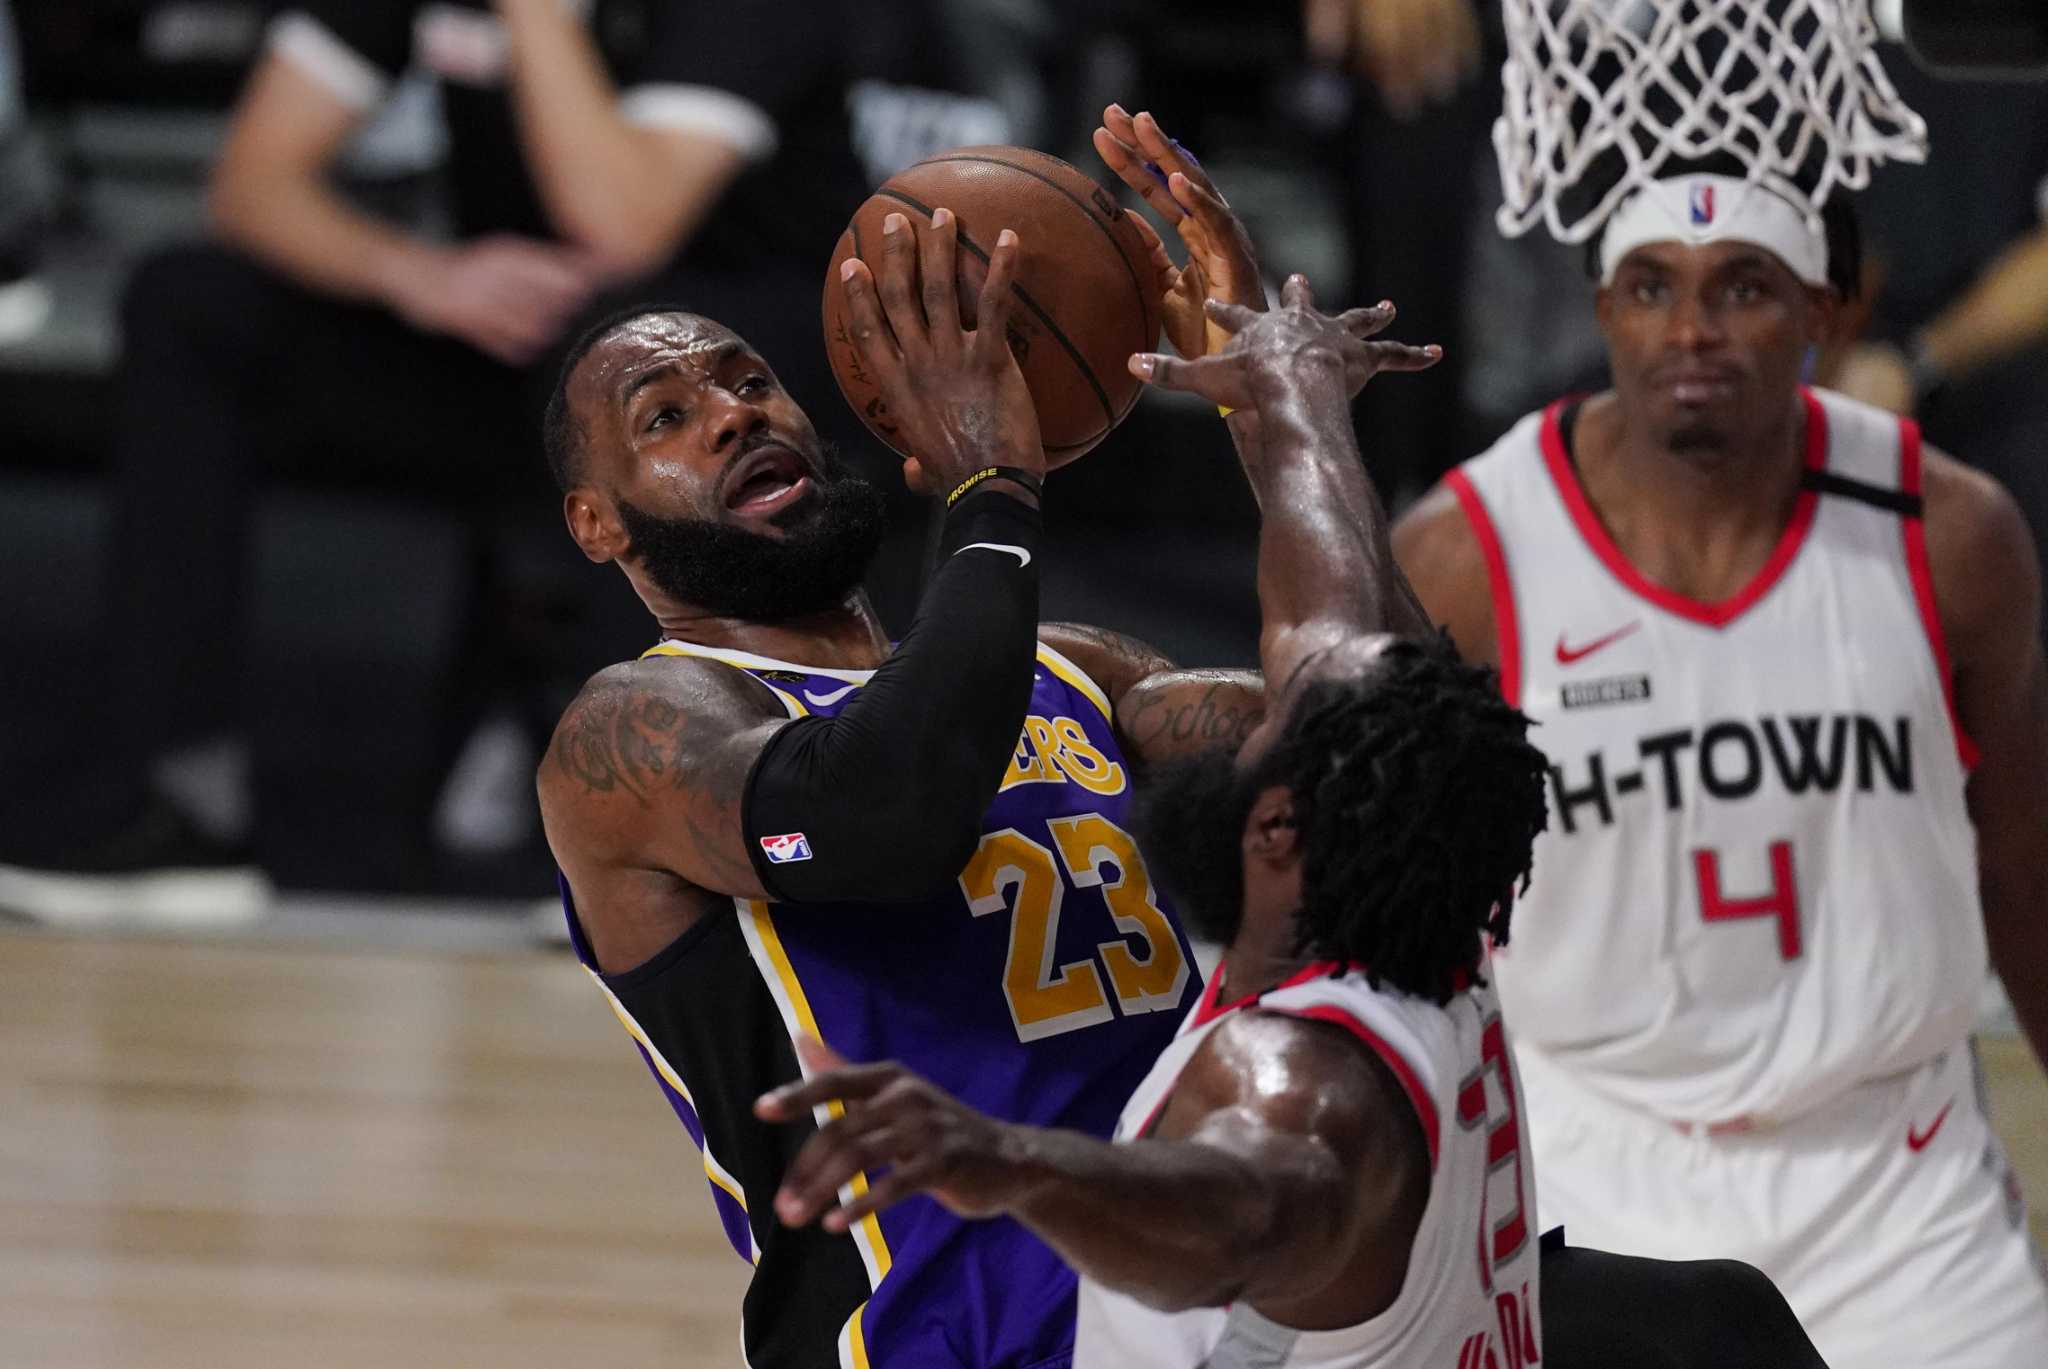 Lakers News: LeBron James Explains What Motivates Him Going Into